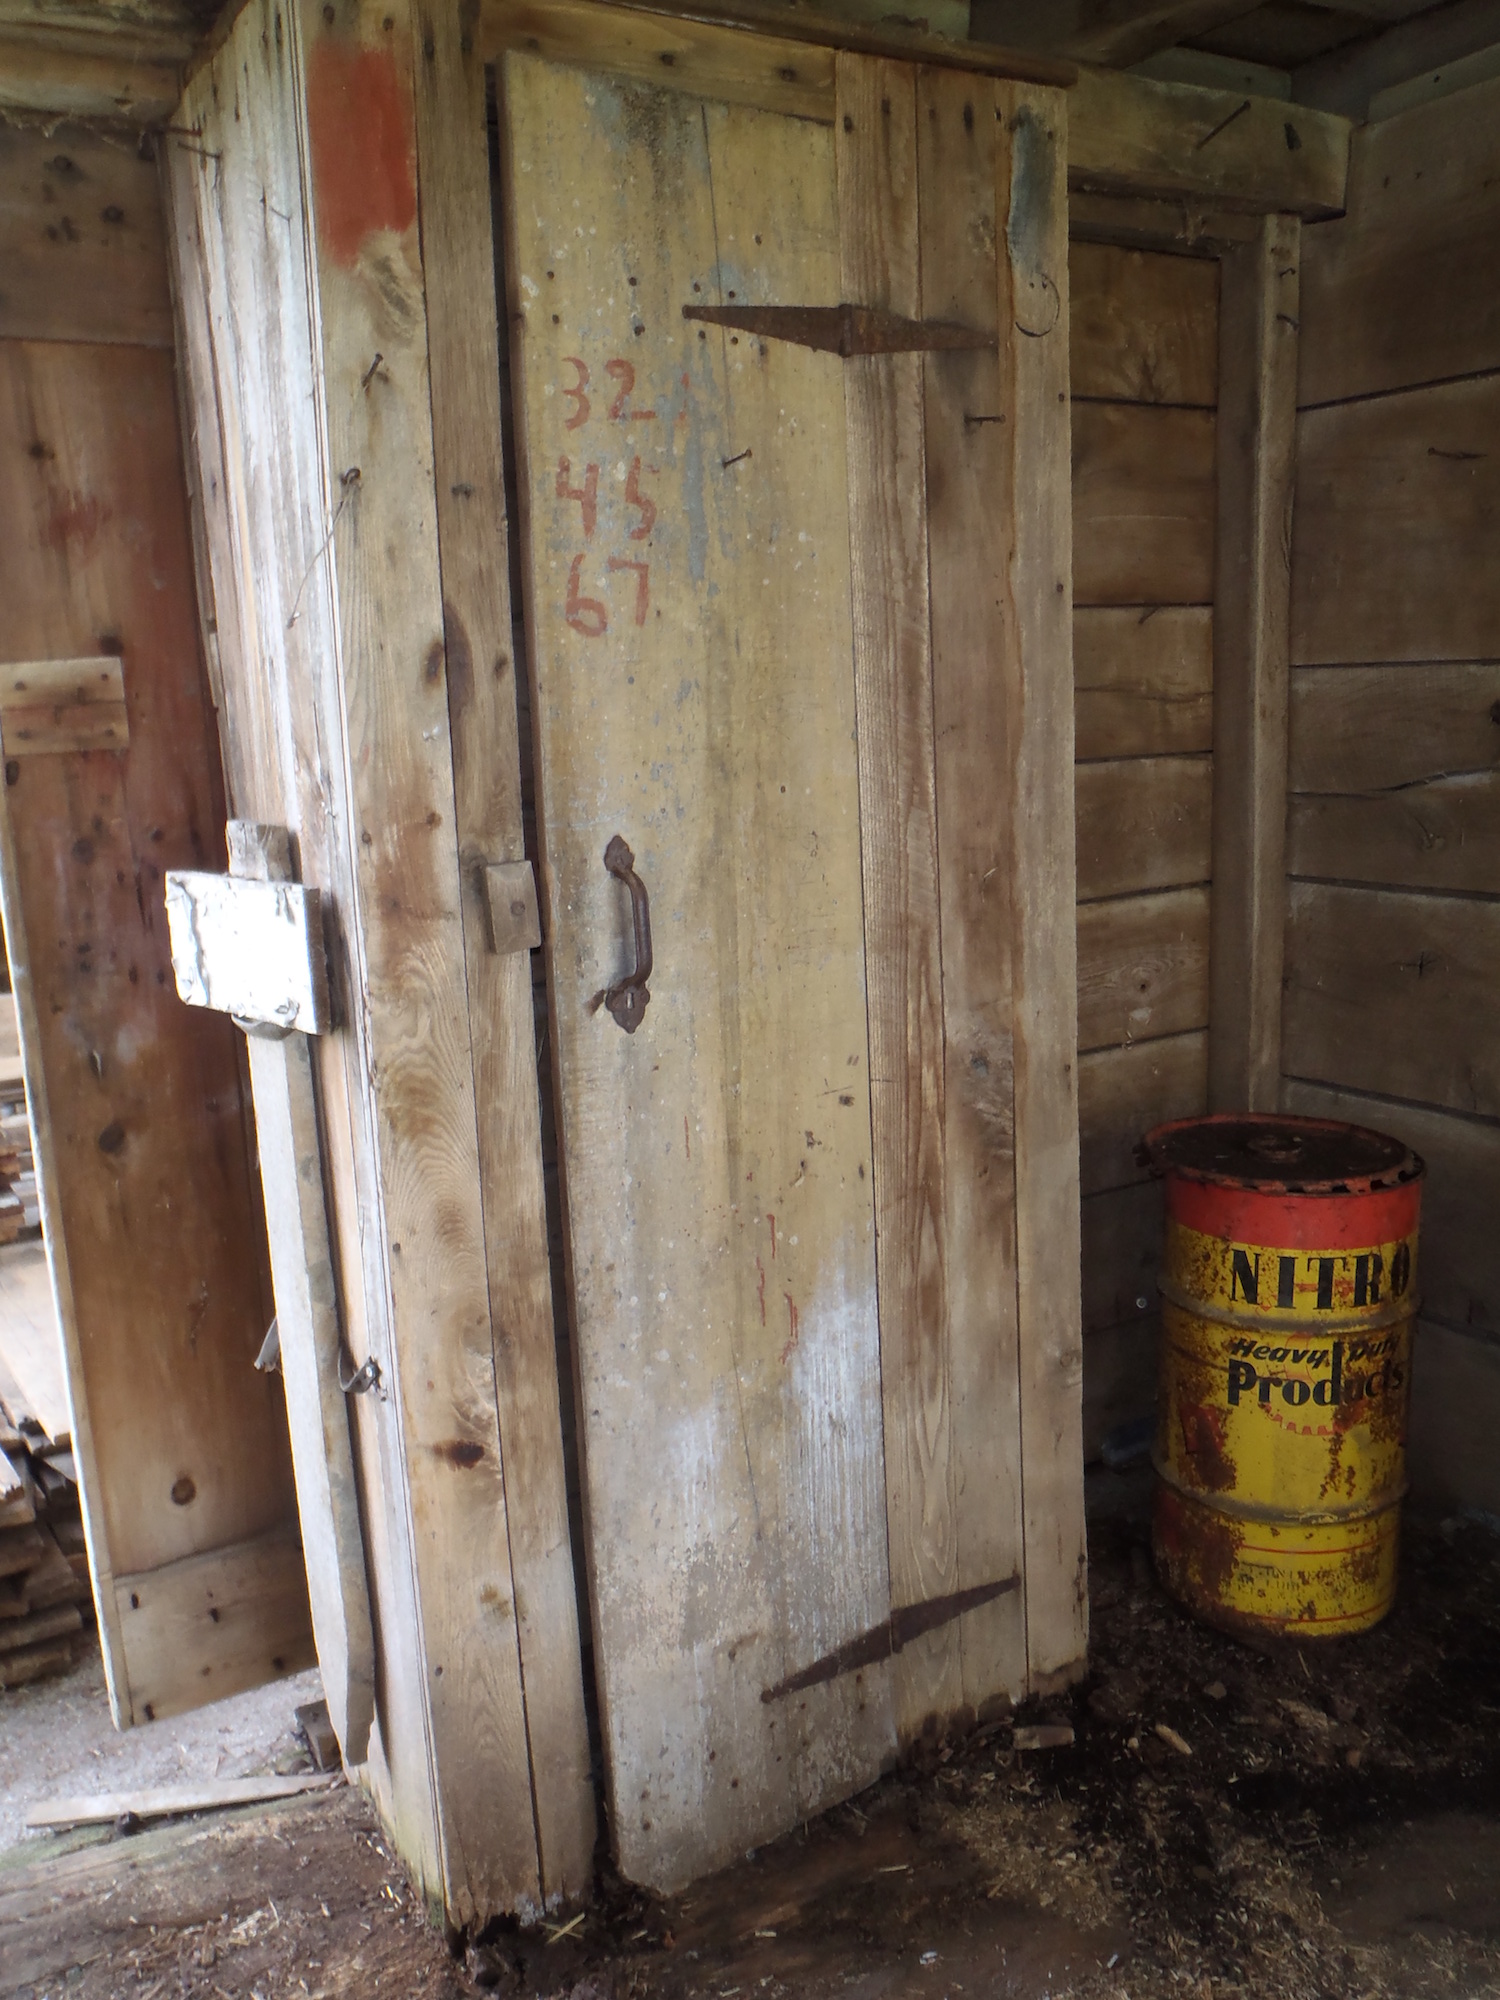 Antique locker found inside of a Michigan barn